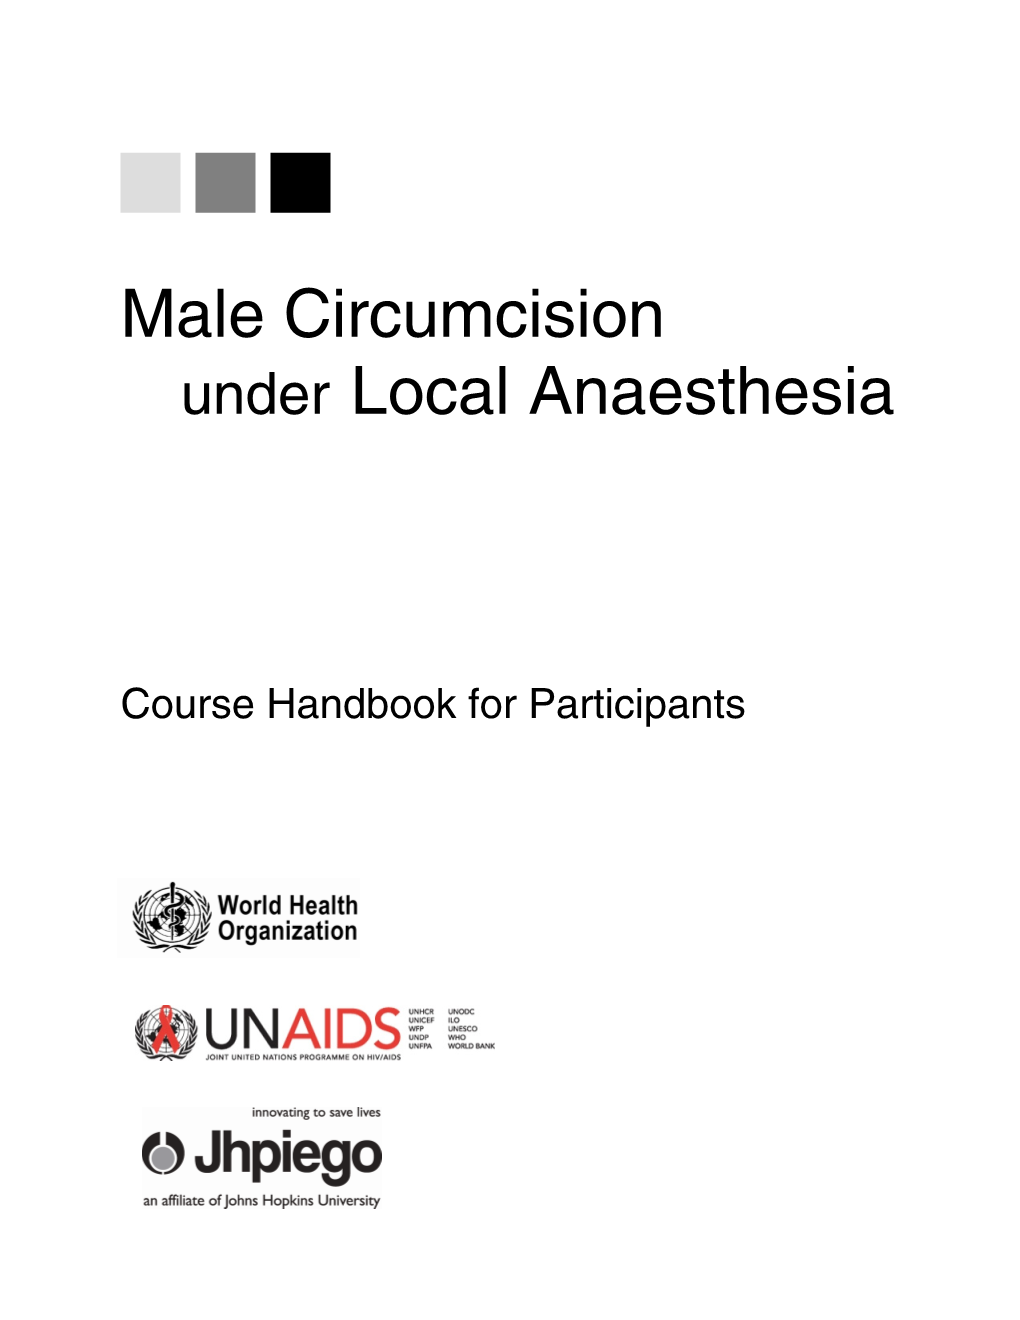 Male Circumcision Under Local Anaesthesia